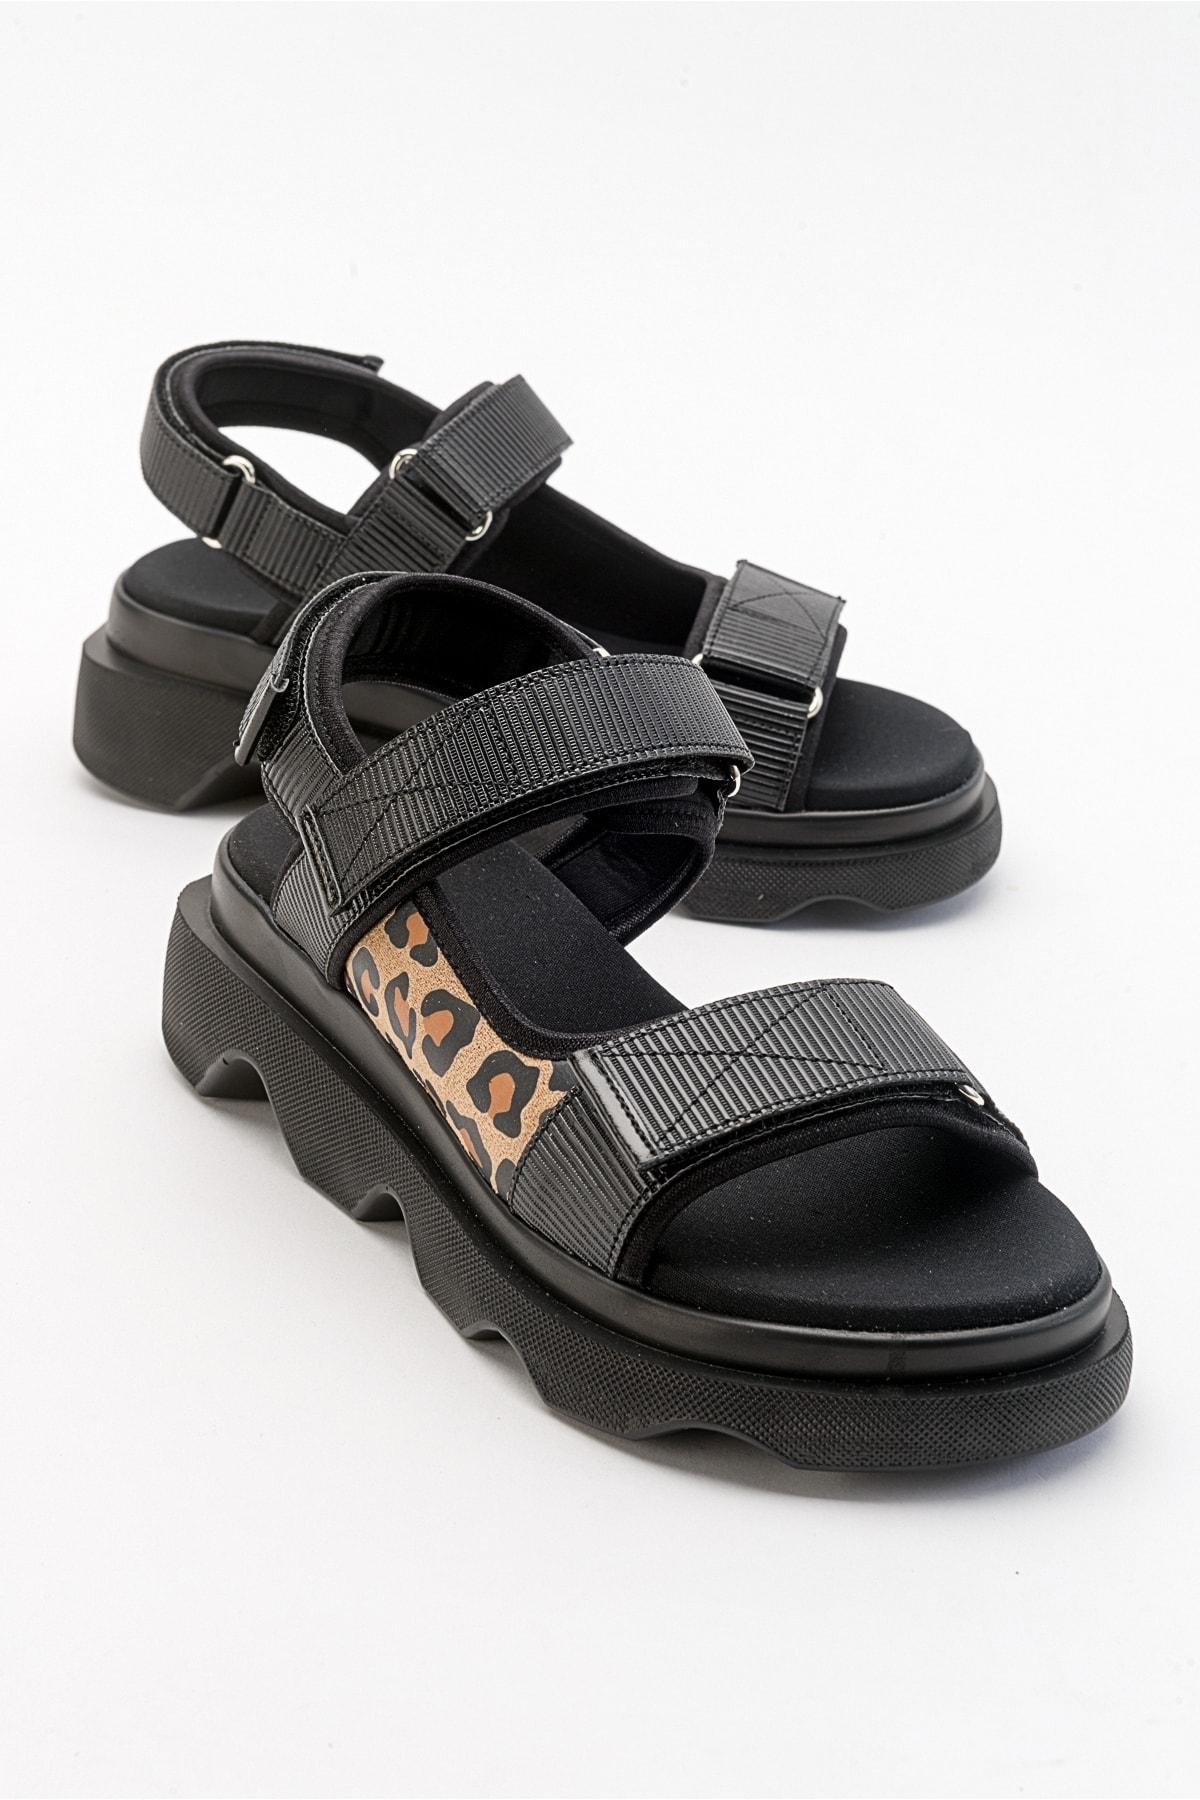 Levně LuviShoes Tedy Women's Black Patterned Sandals